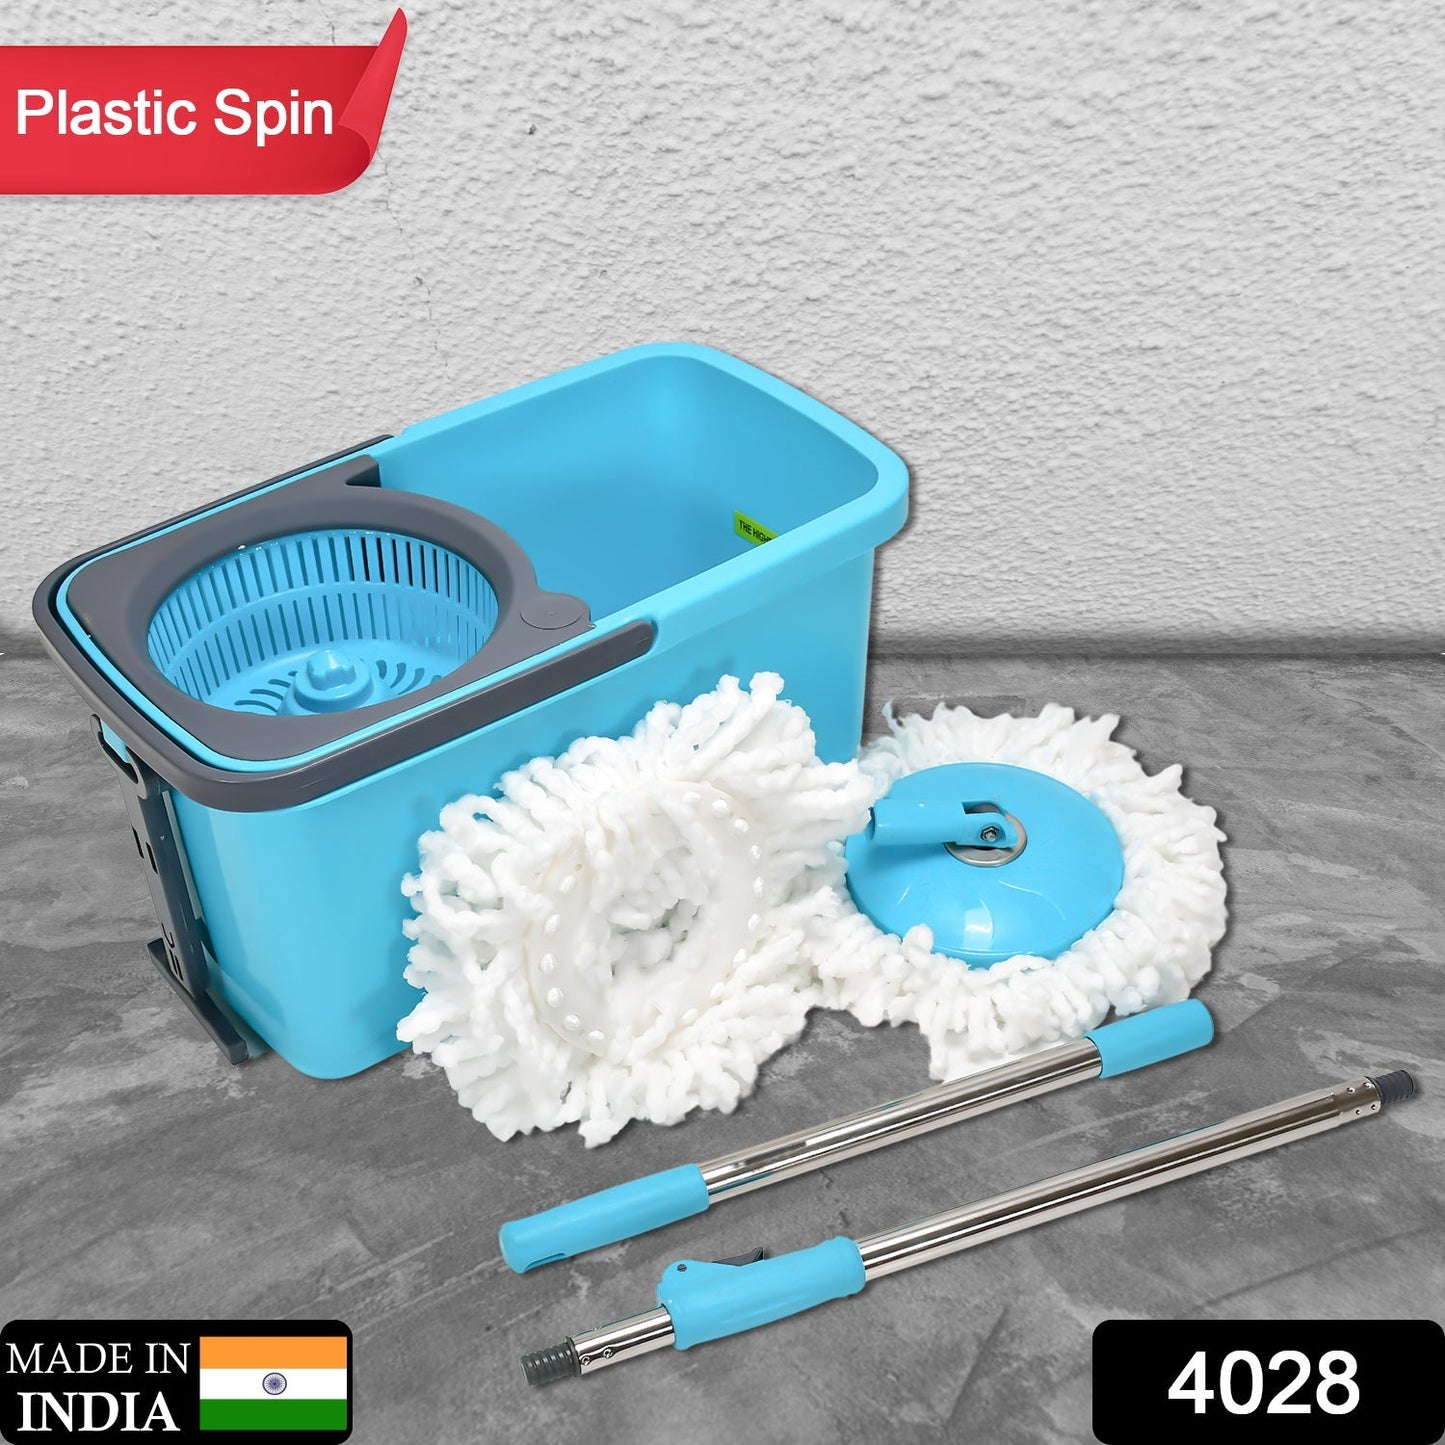 4028 Quick Spin Mop Plastic spin, Bucket Floor Cleaning, Easy Wheels & Big Bucket, Floor Cleaning Mop with Bucket Dukandaily